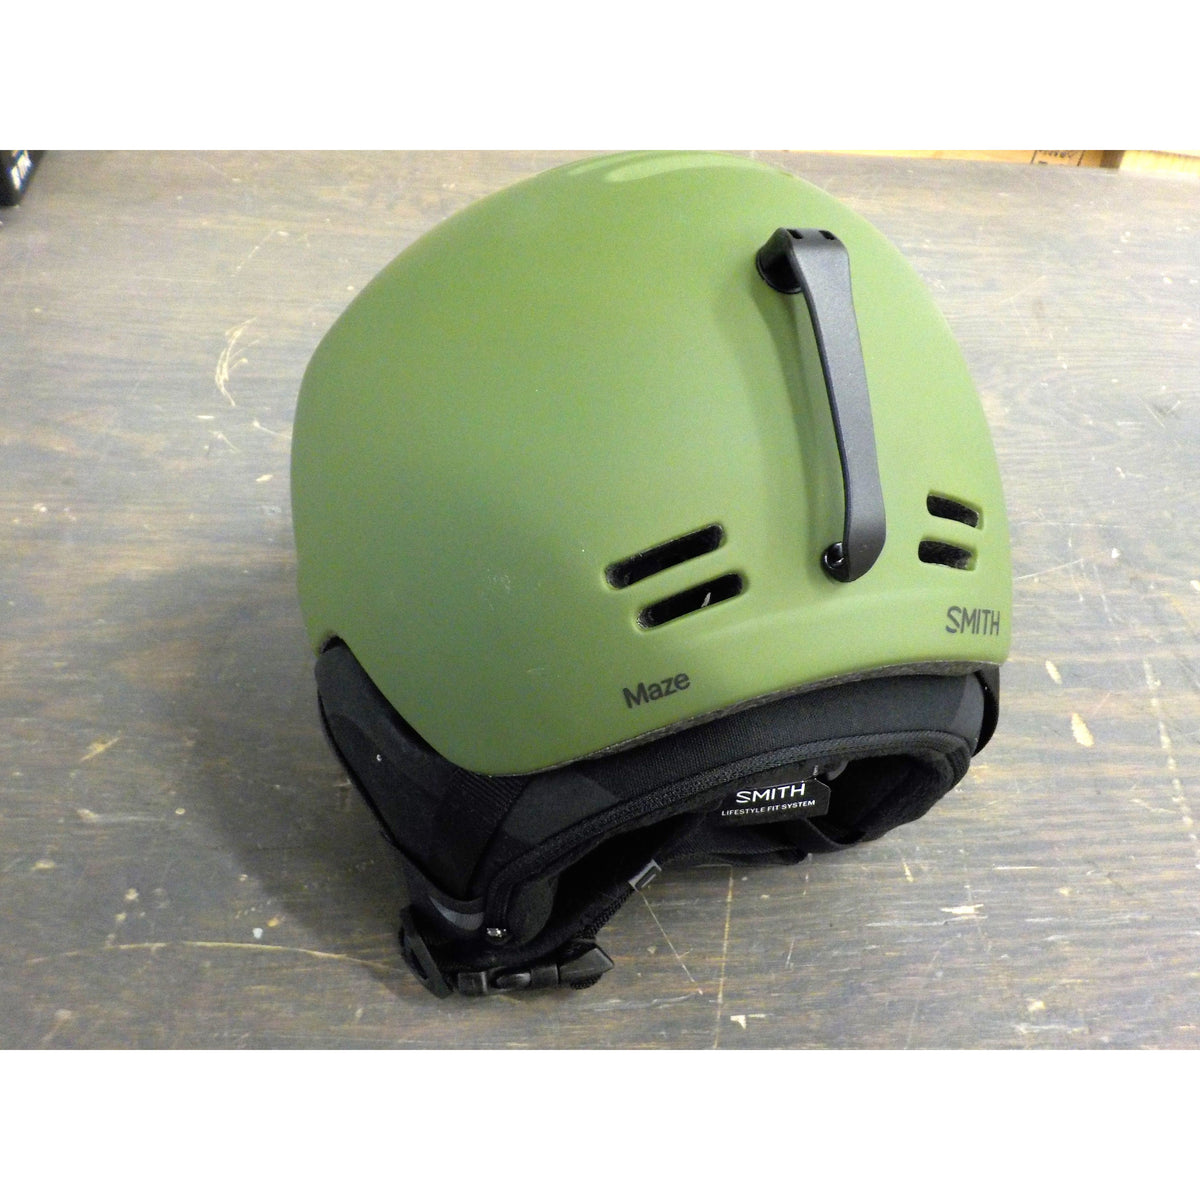 Smith Optics Maze Bike Helmet - Matte Moss - Medium - Used - Acceptable